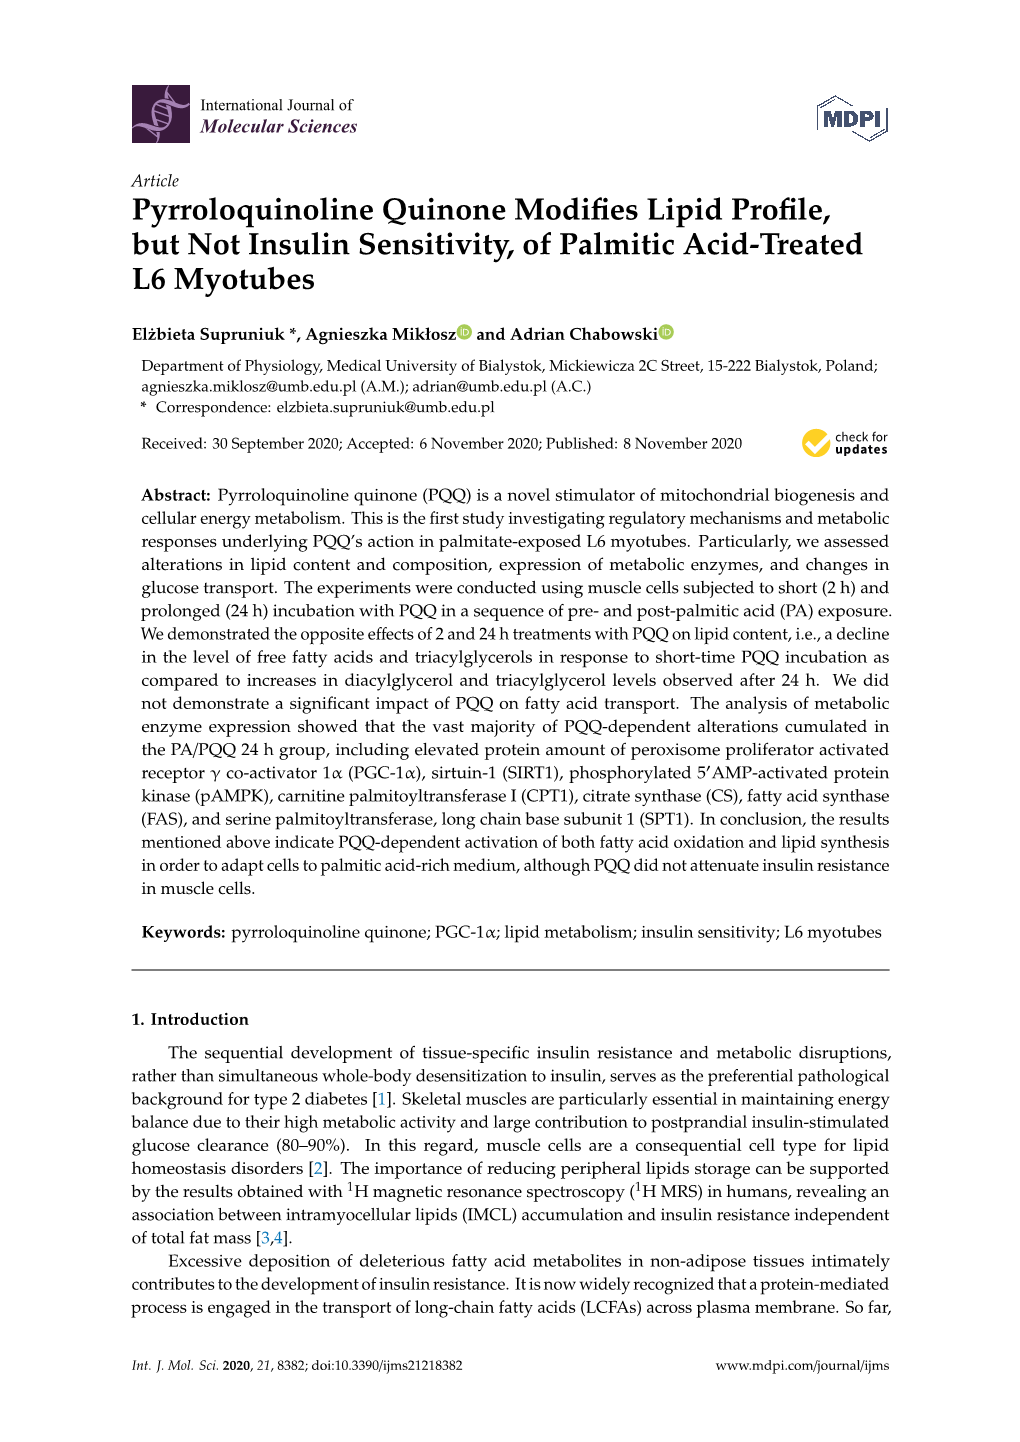 Pyrroloquinoline Quinone Modifies Lipid Profile, but Not Insulin